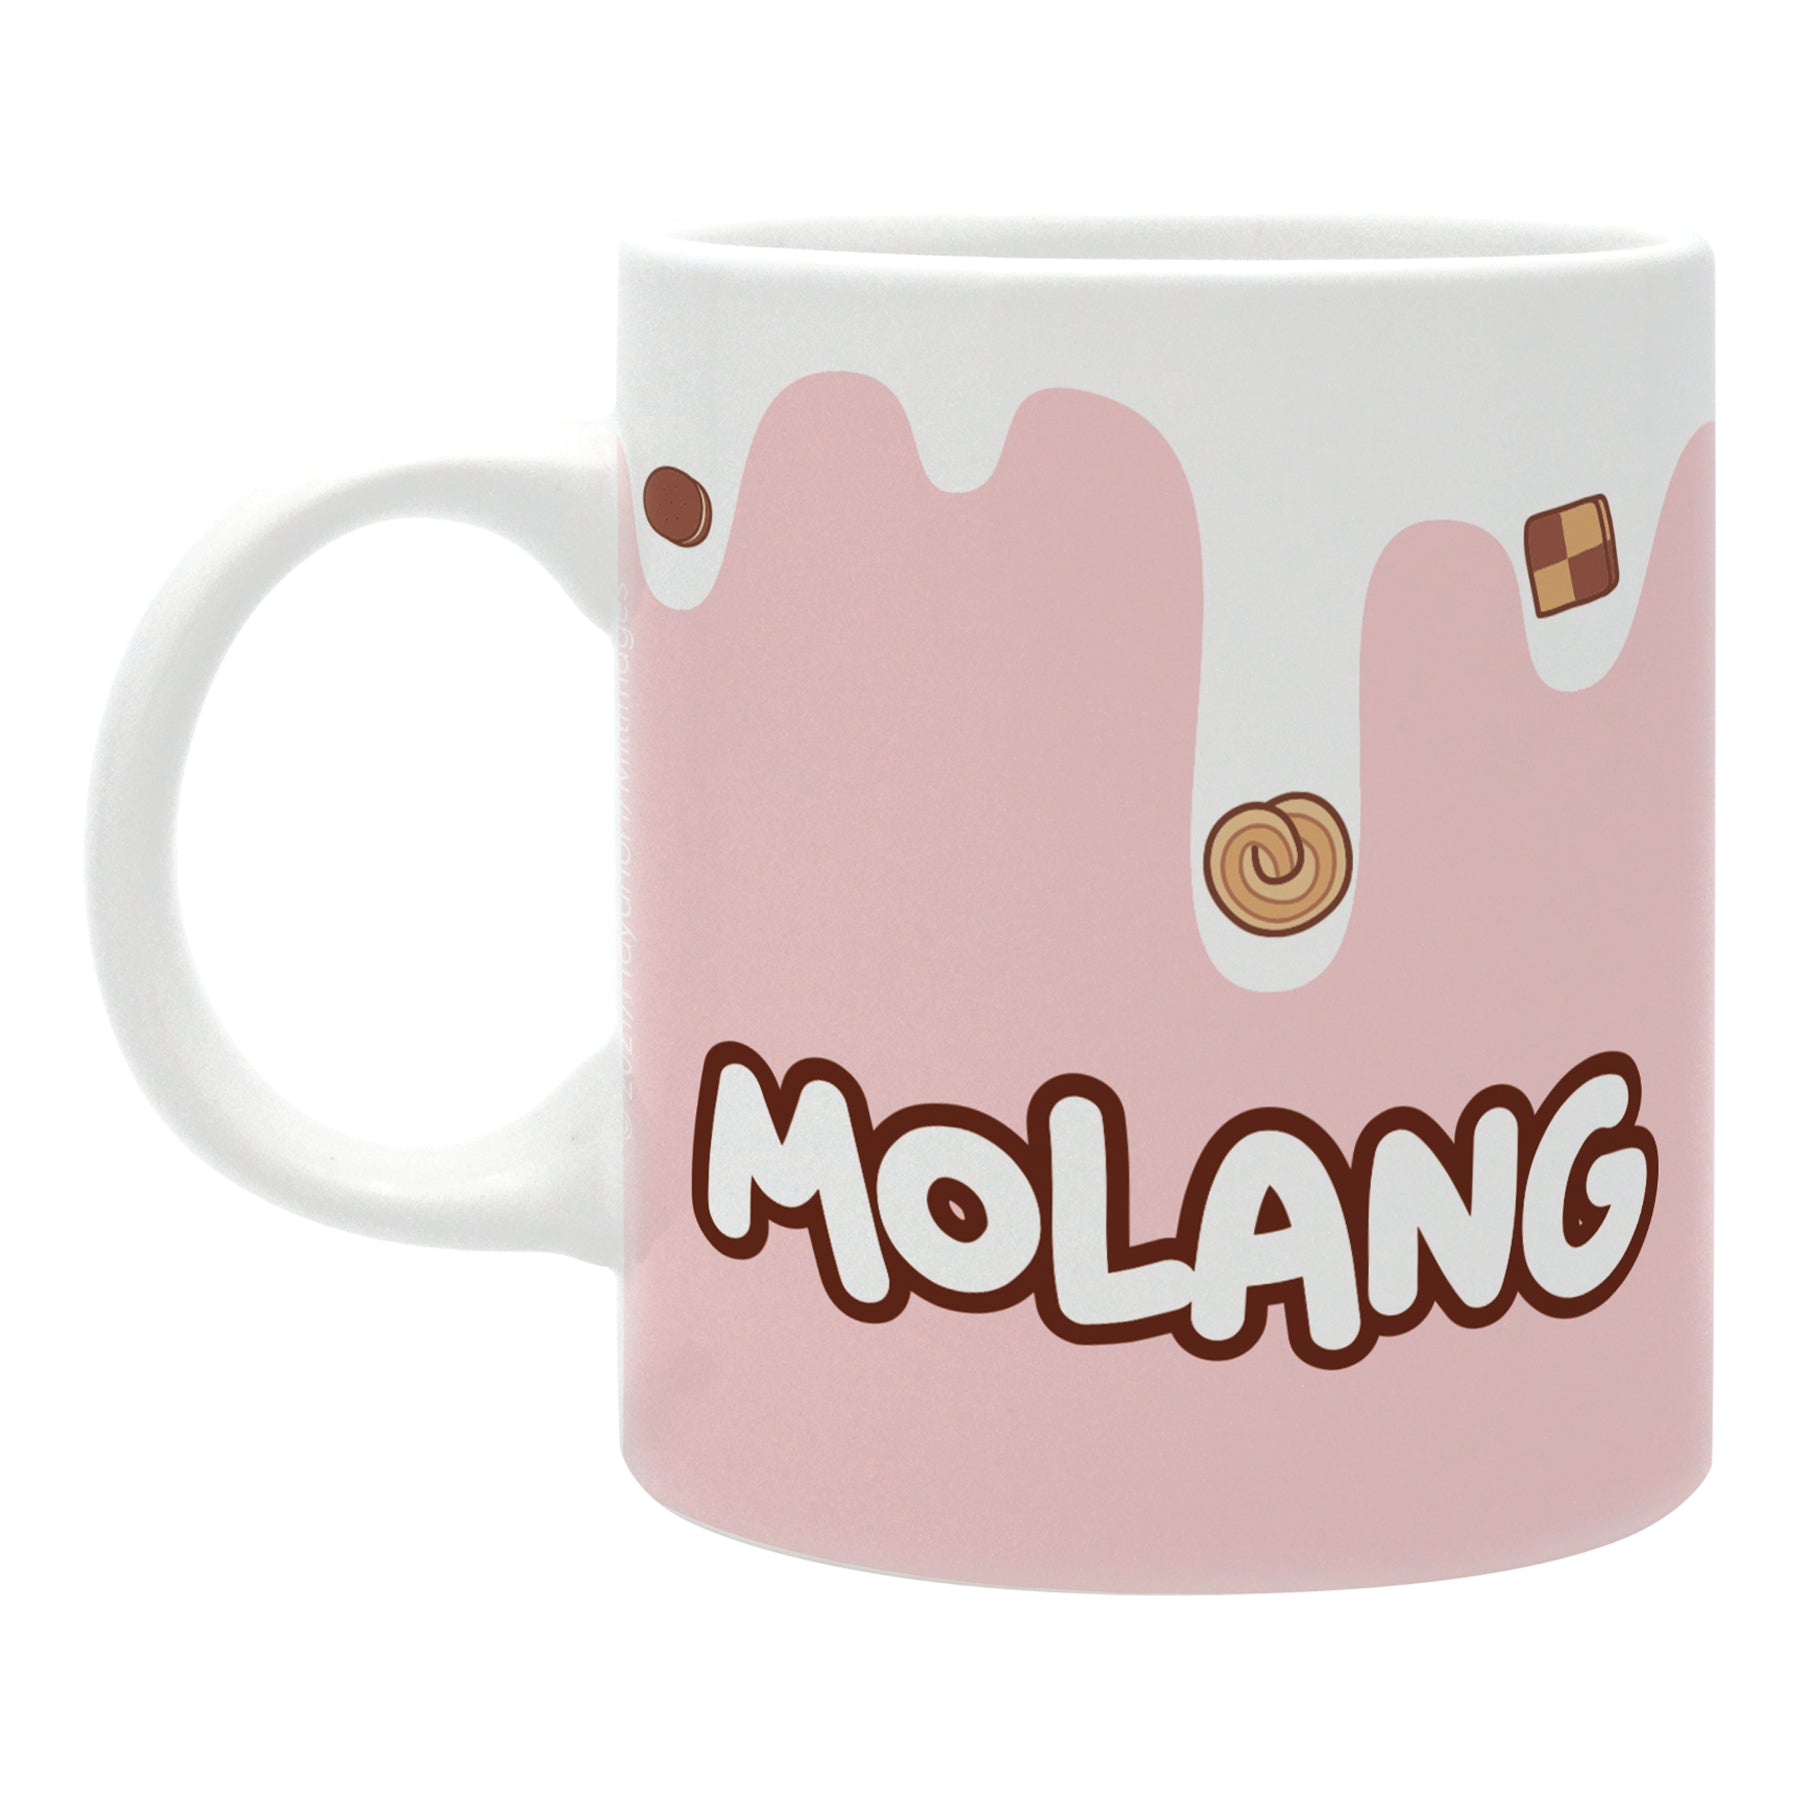 Molang Milk & Cookies Mug, 11 oz. - Abysse - 2